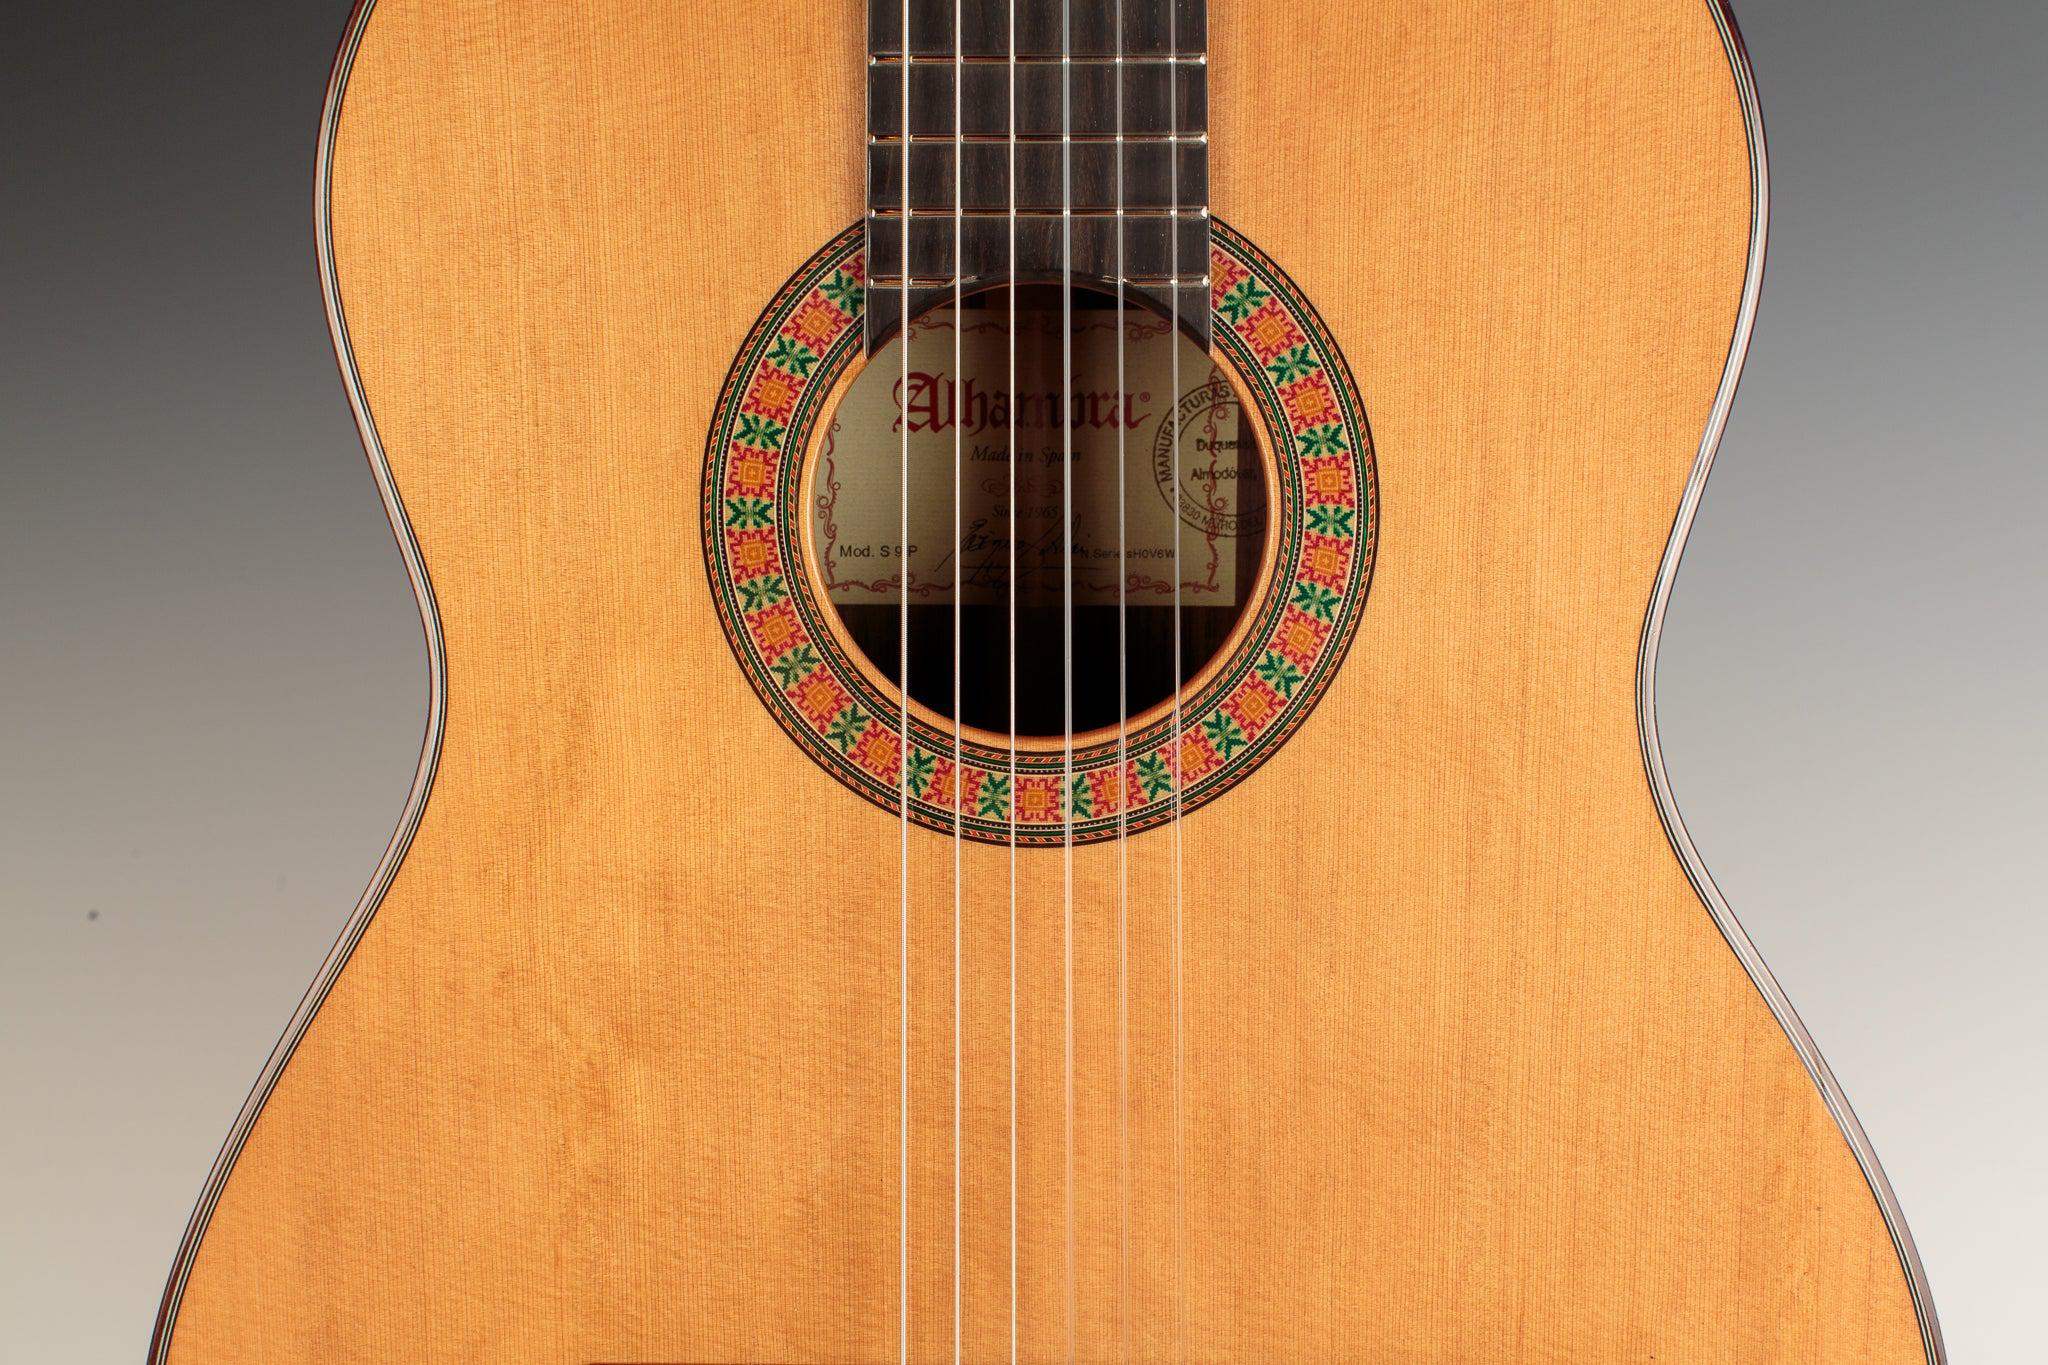 Alhambra 9p Senorita 636mm Scale - 7/8 Size Classical Guitar